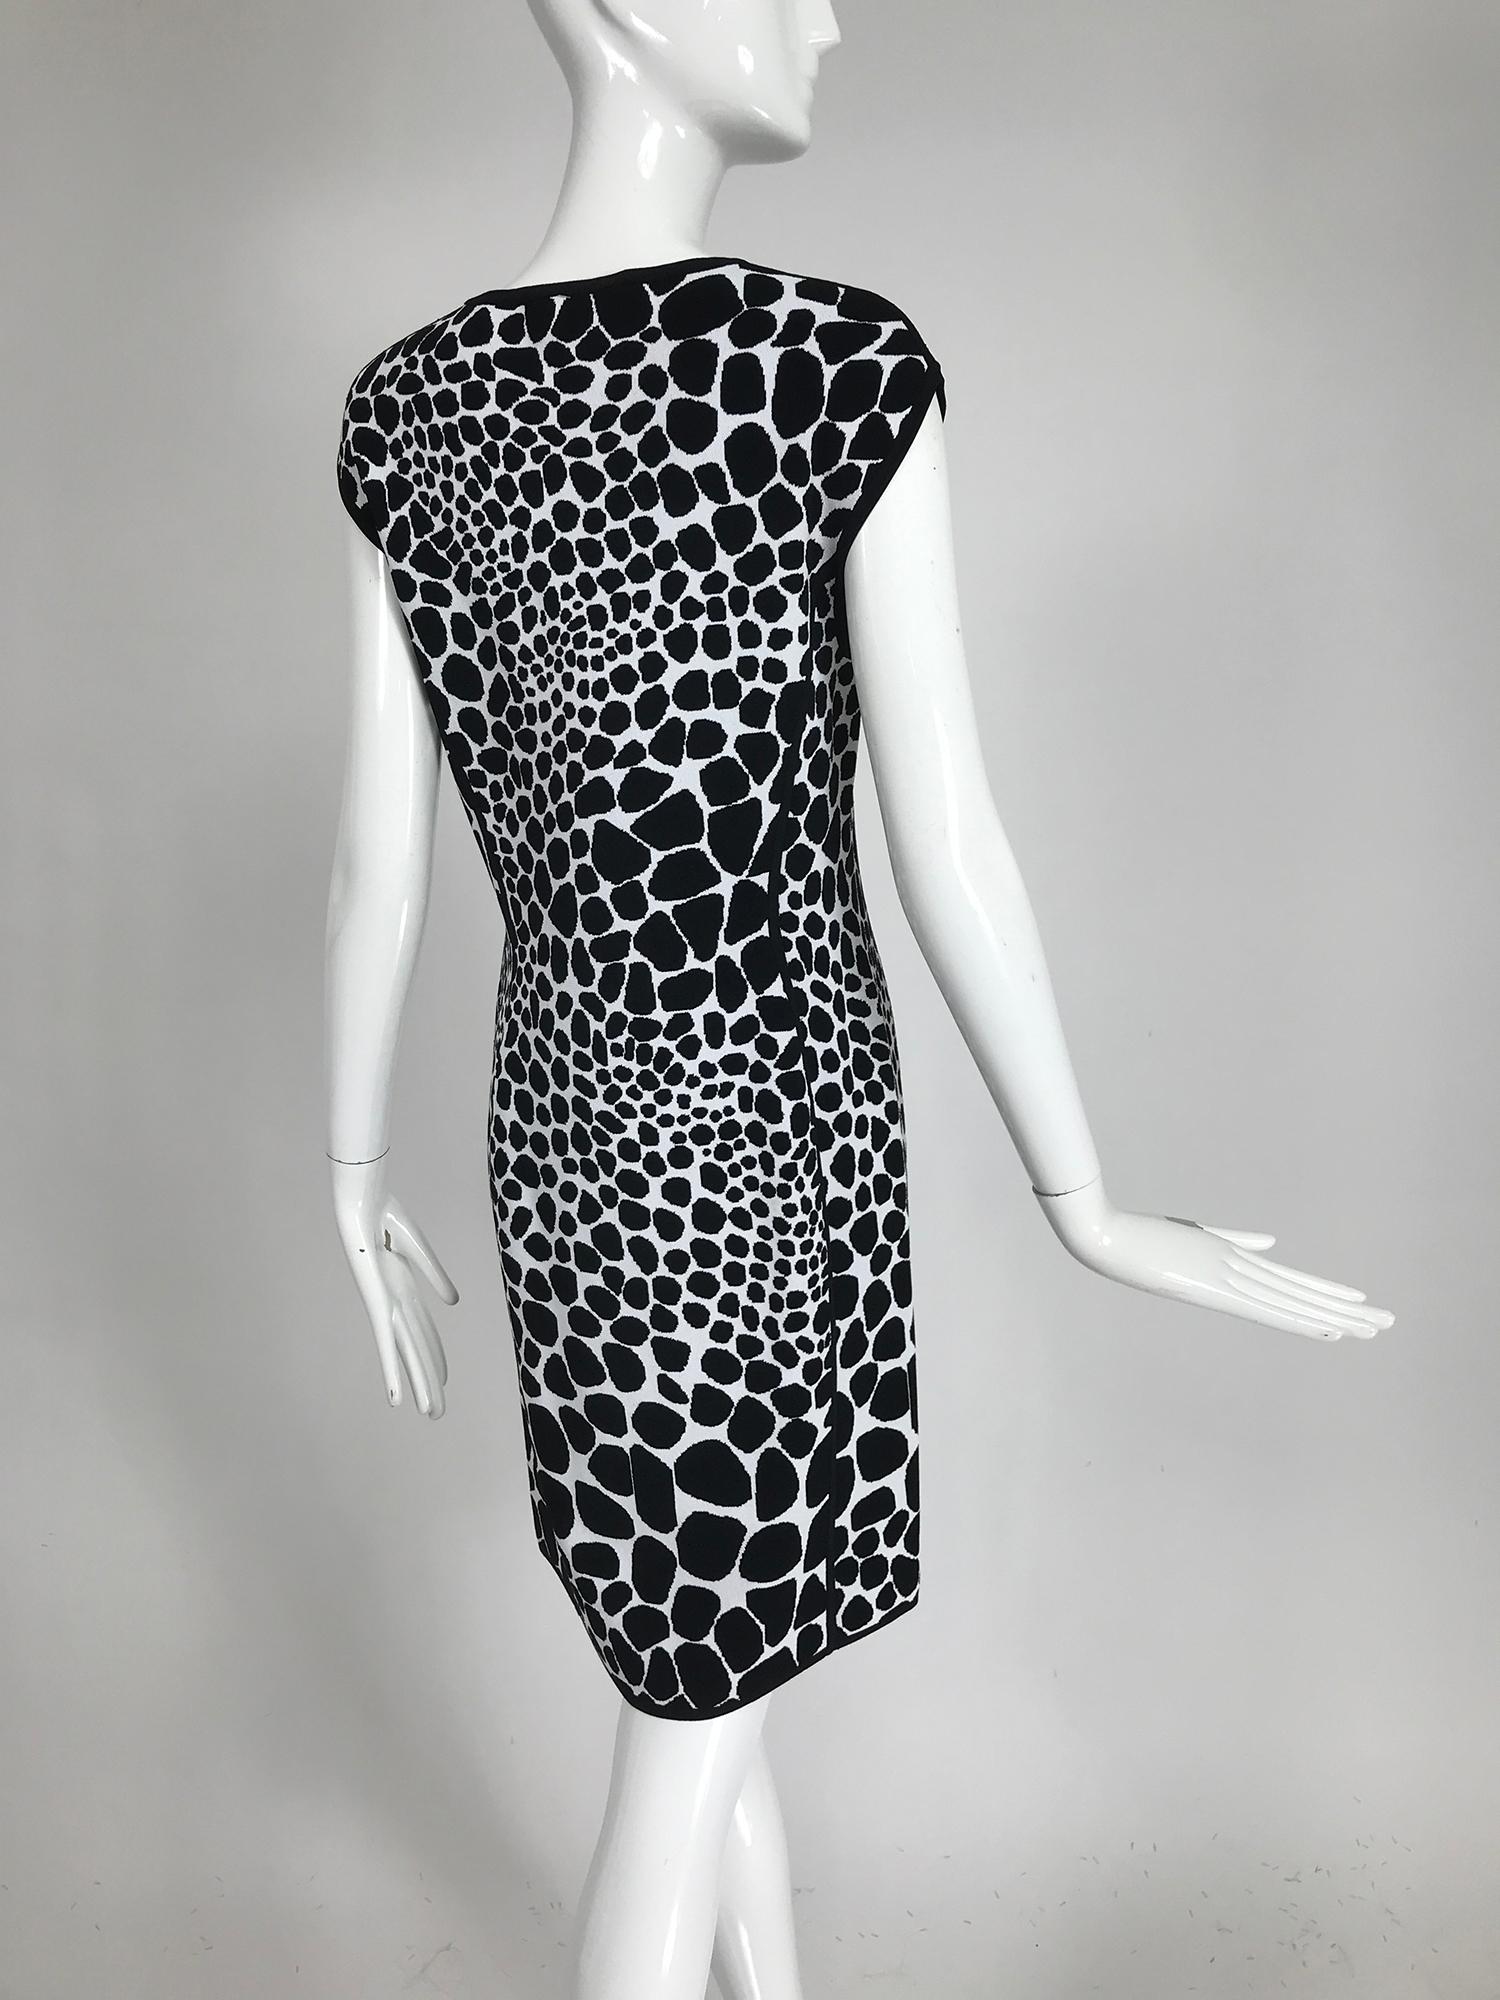 Women's Michael Kors Black & White Knit Stretch Animal Print Dress Large